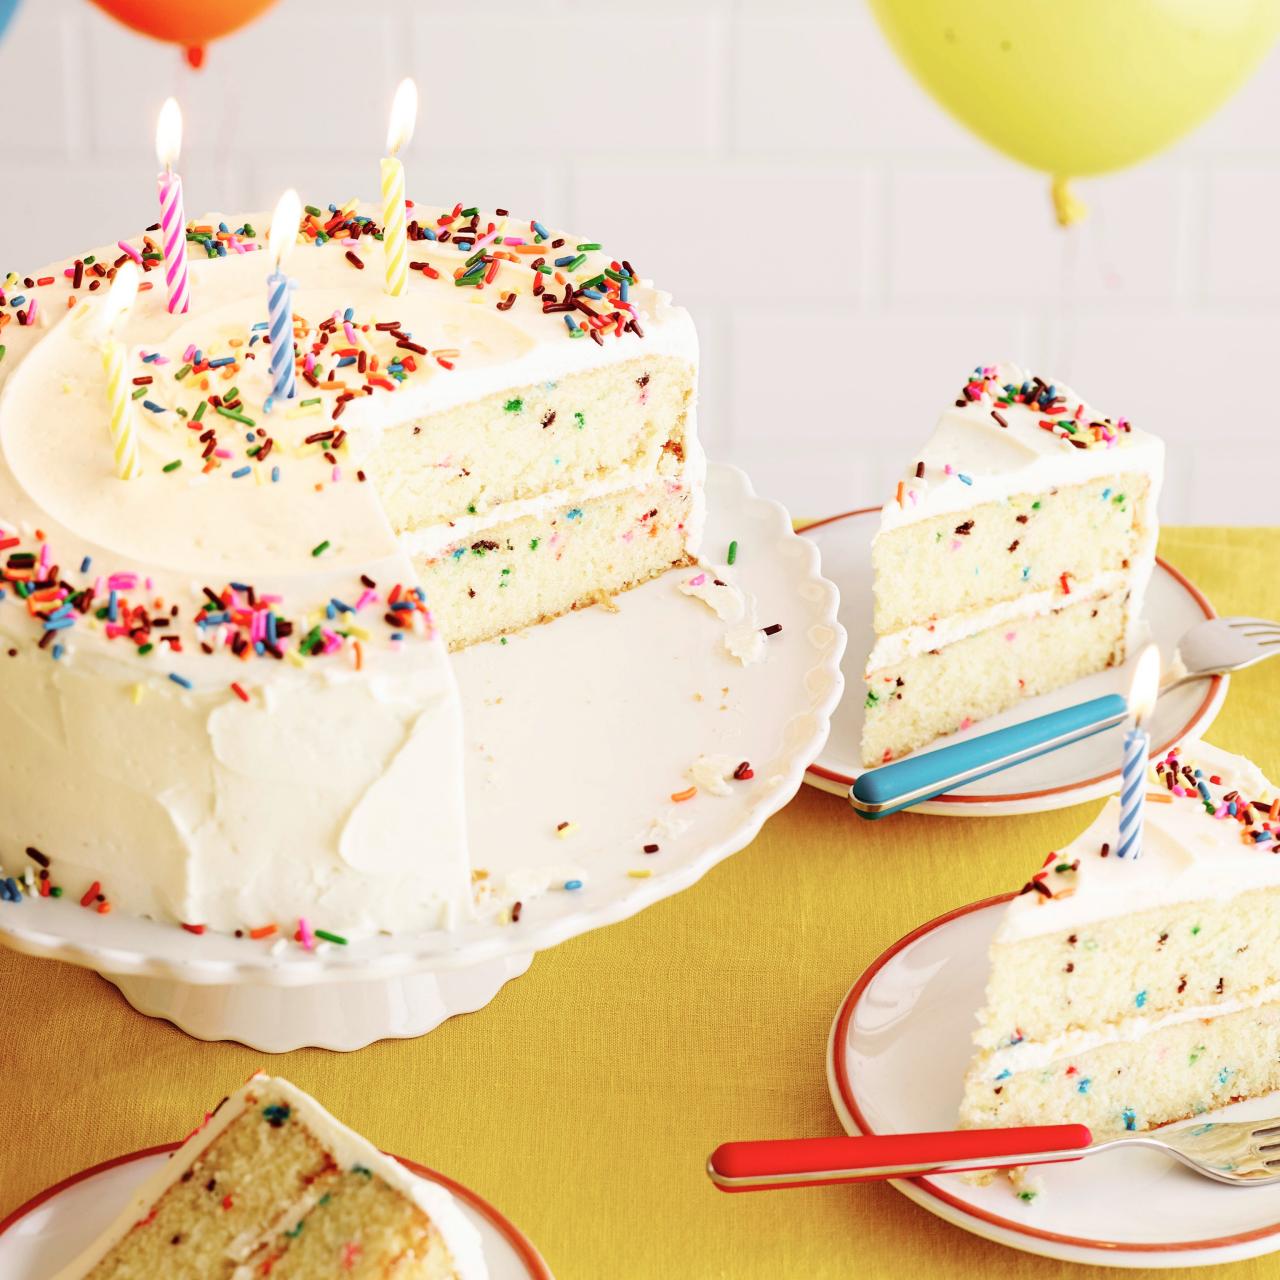 Chocolate Birthday Cake Images With Name Free Download | Birthday cake  chocolate, Chocolate cake designs, Cake